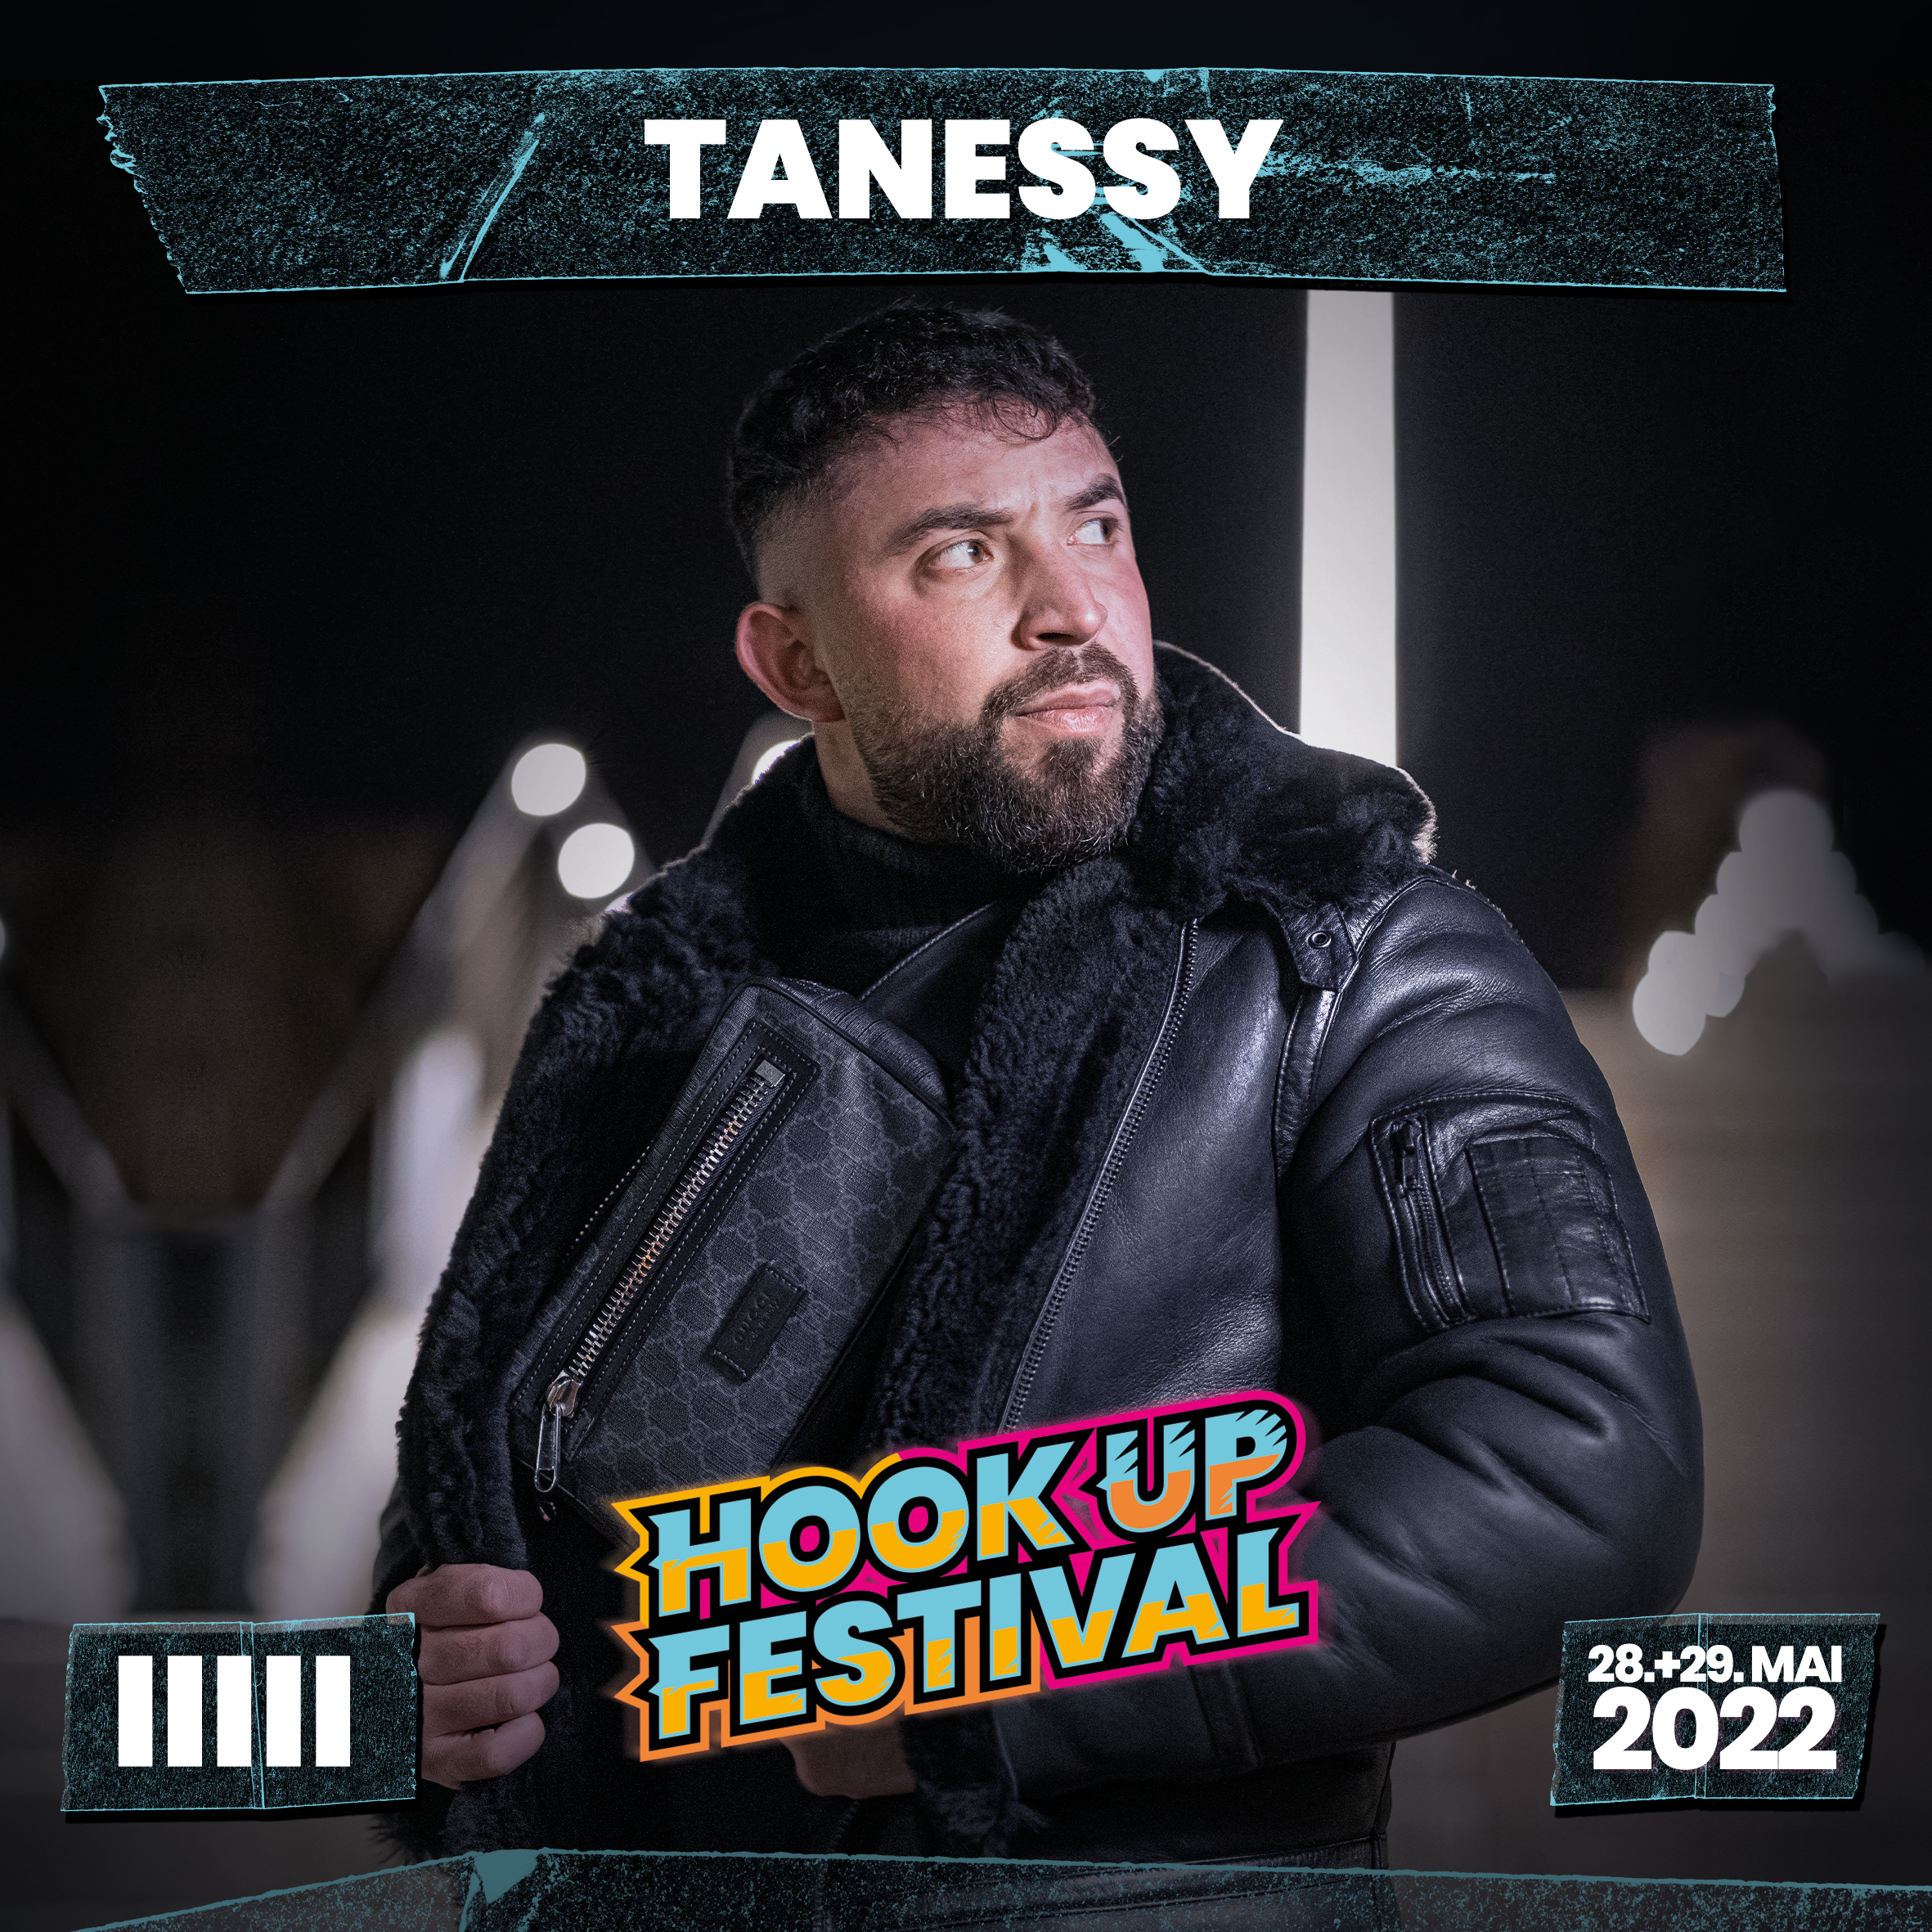 TANESSY HOOK UP FESTIVAL KARLSRUHE 2022